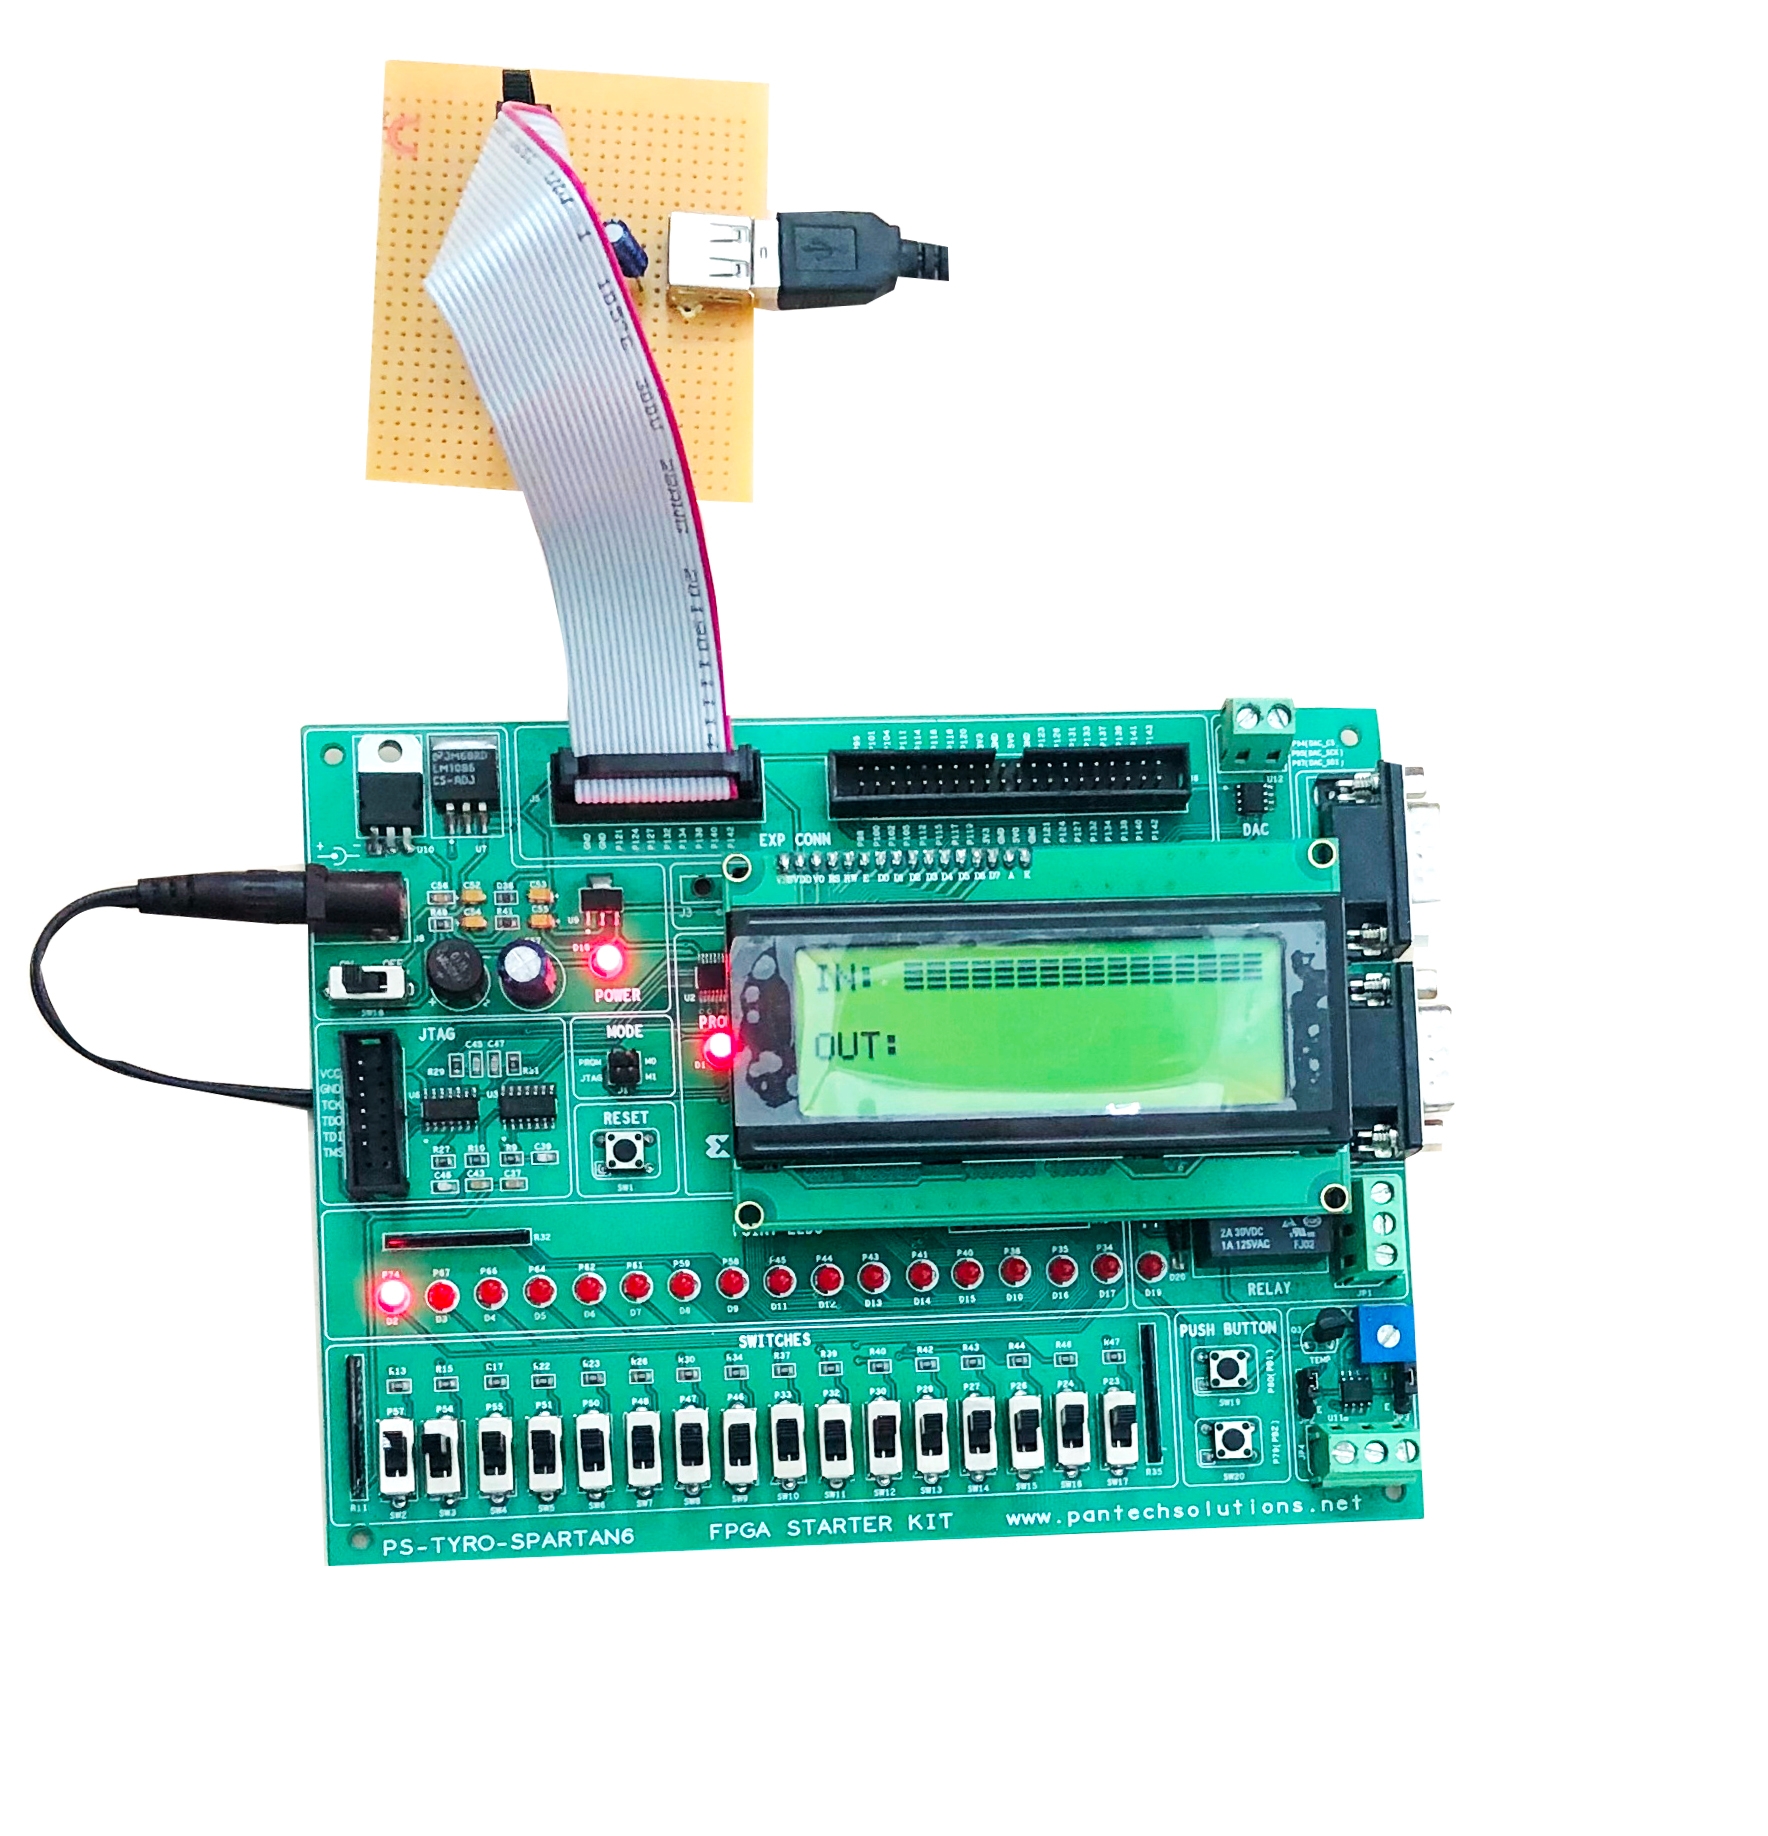 FPGA Implementation of AES Algorithm using Spartan6 FPGA Project Kit